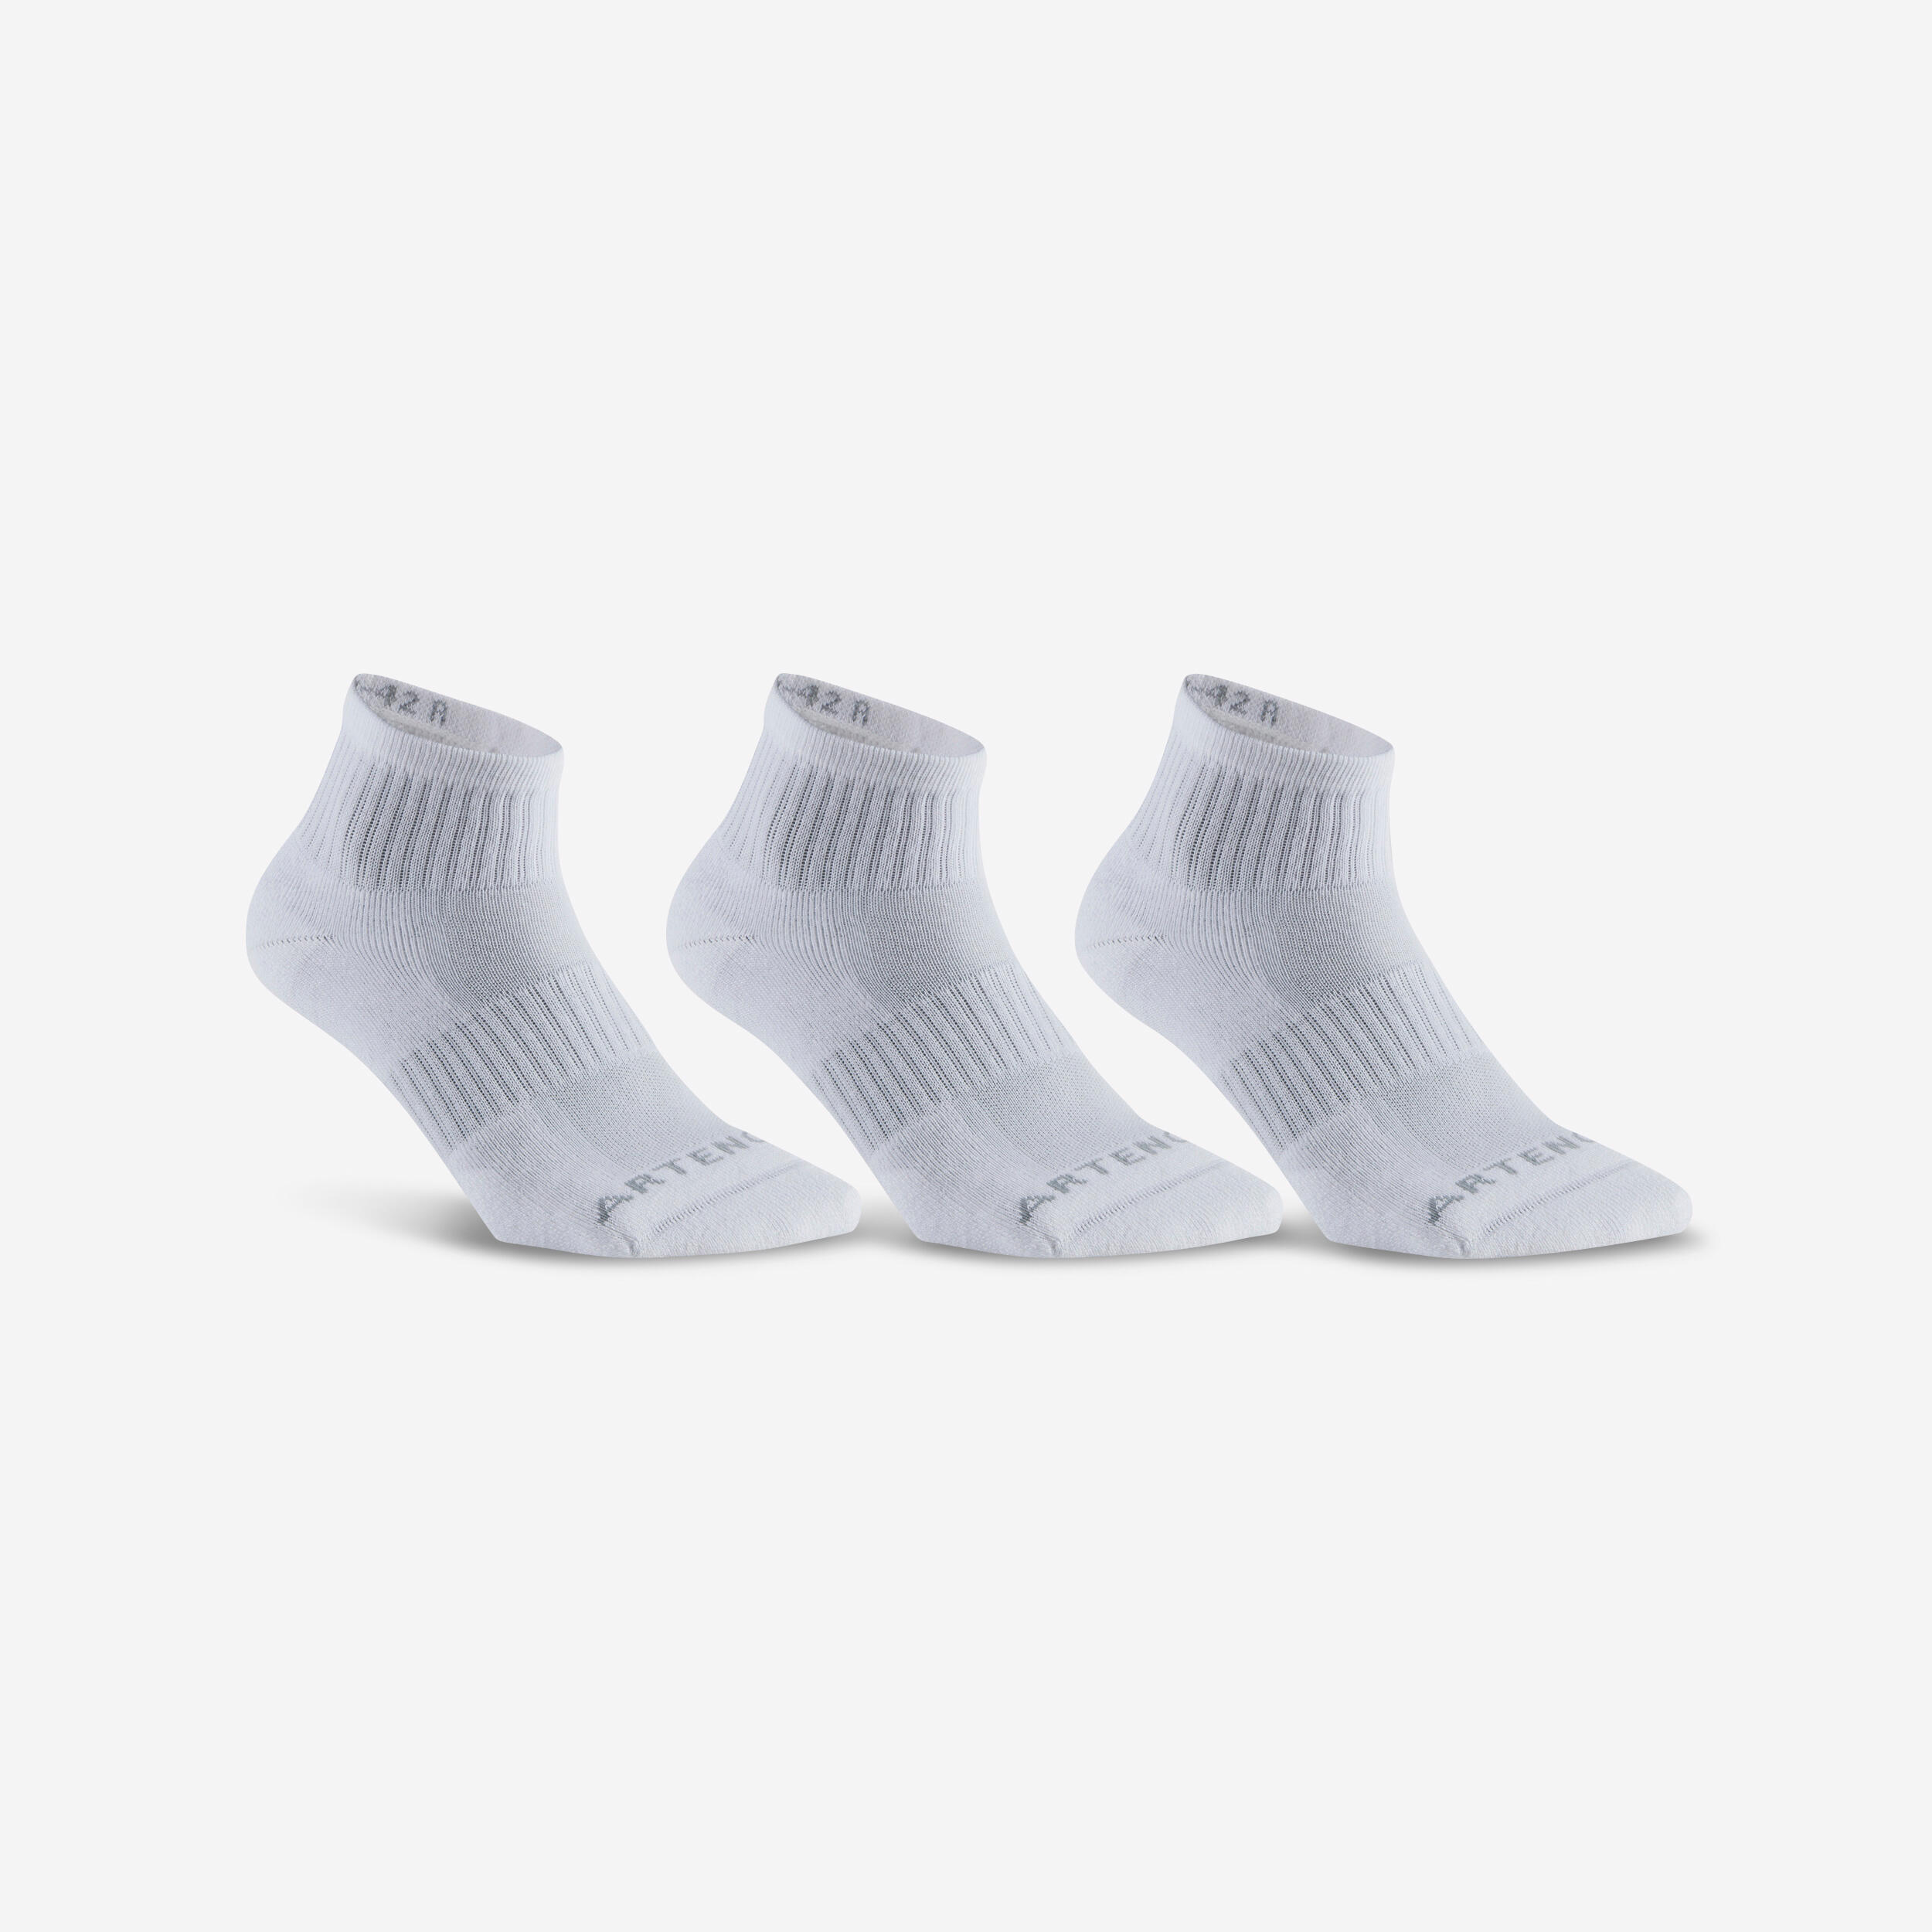 RS 500 Mid Sports Socks Tri-Pack - White 1/5